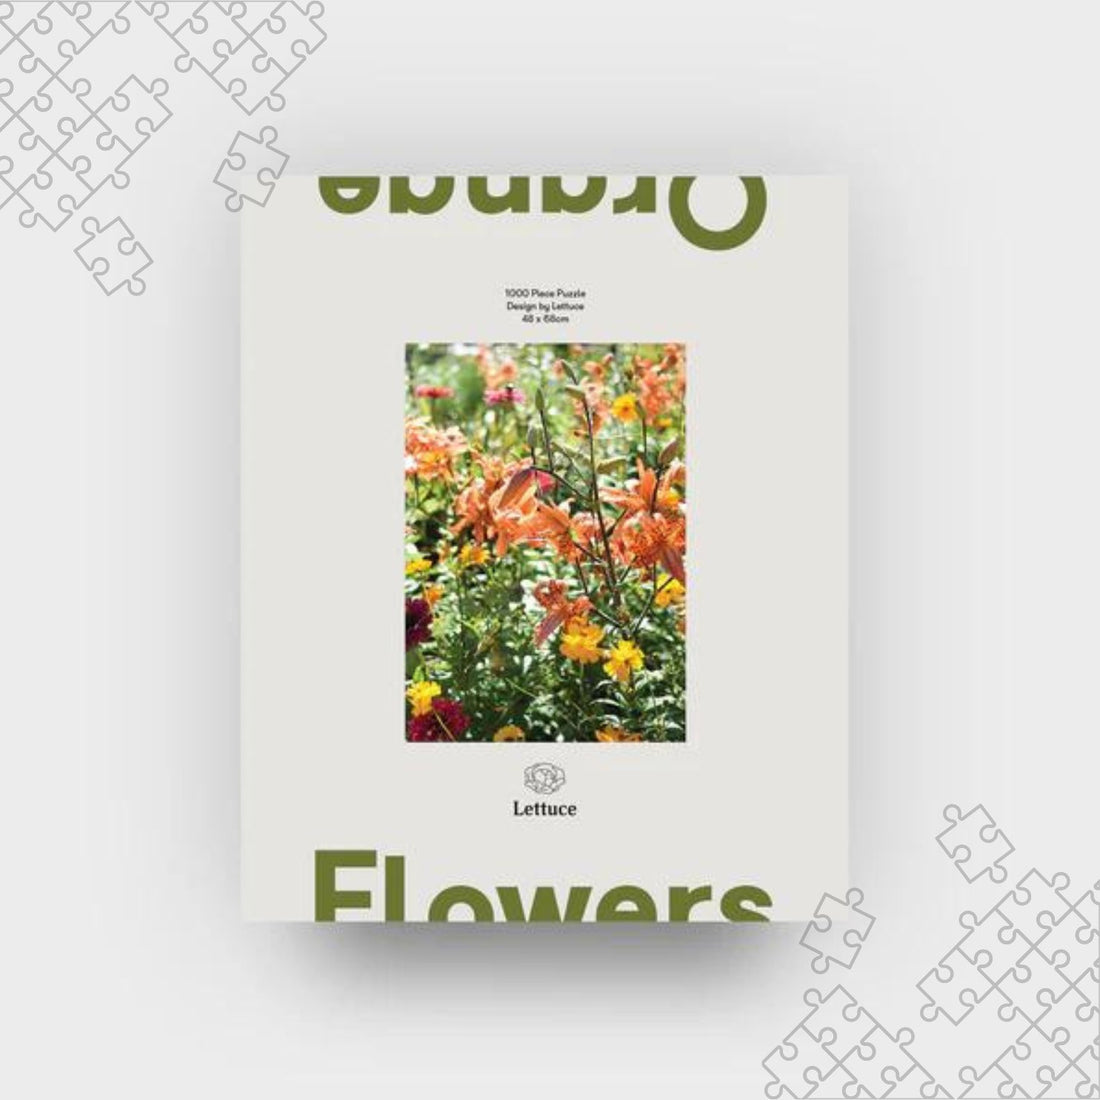 Lettuce - Orange Flowers Puzzle - The Flower Crate